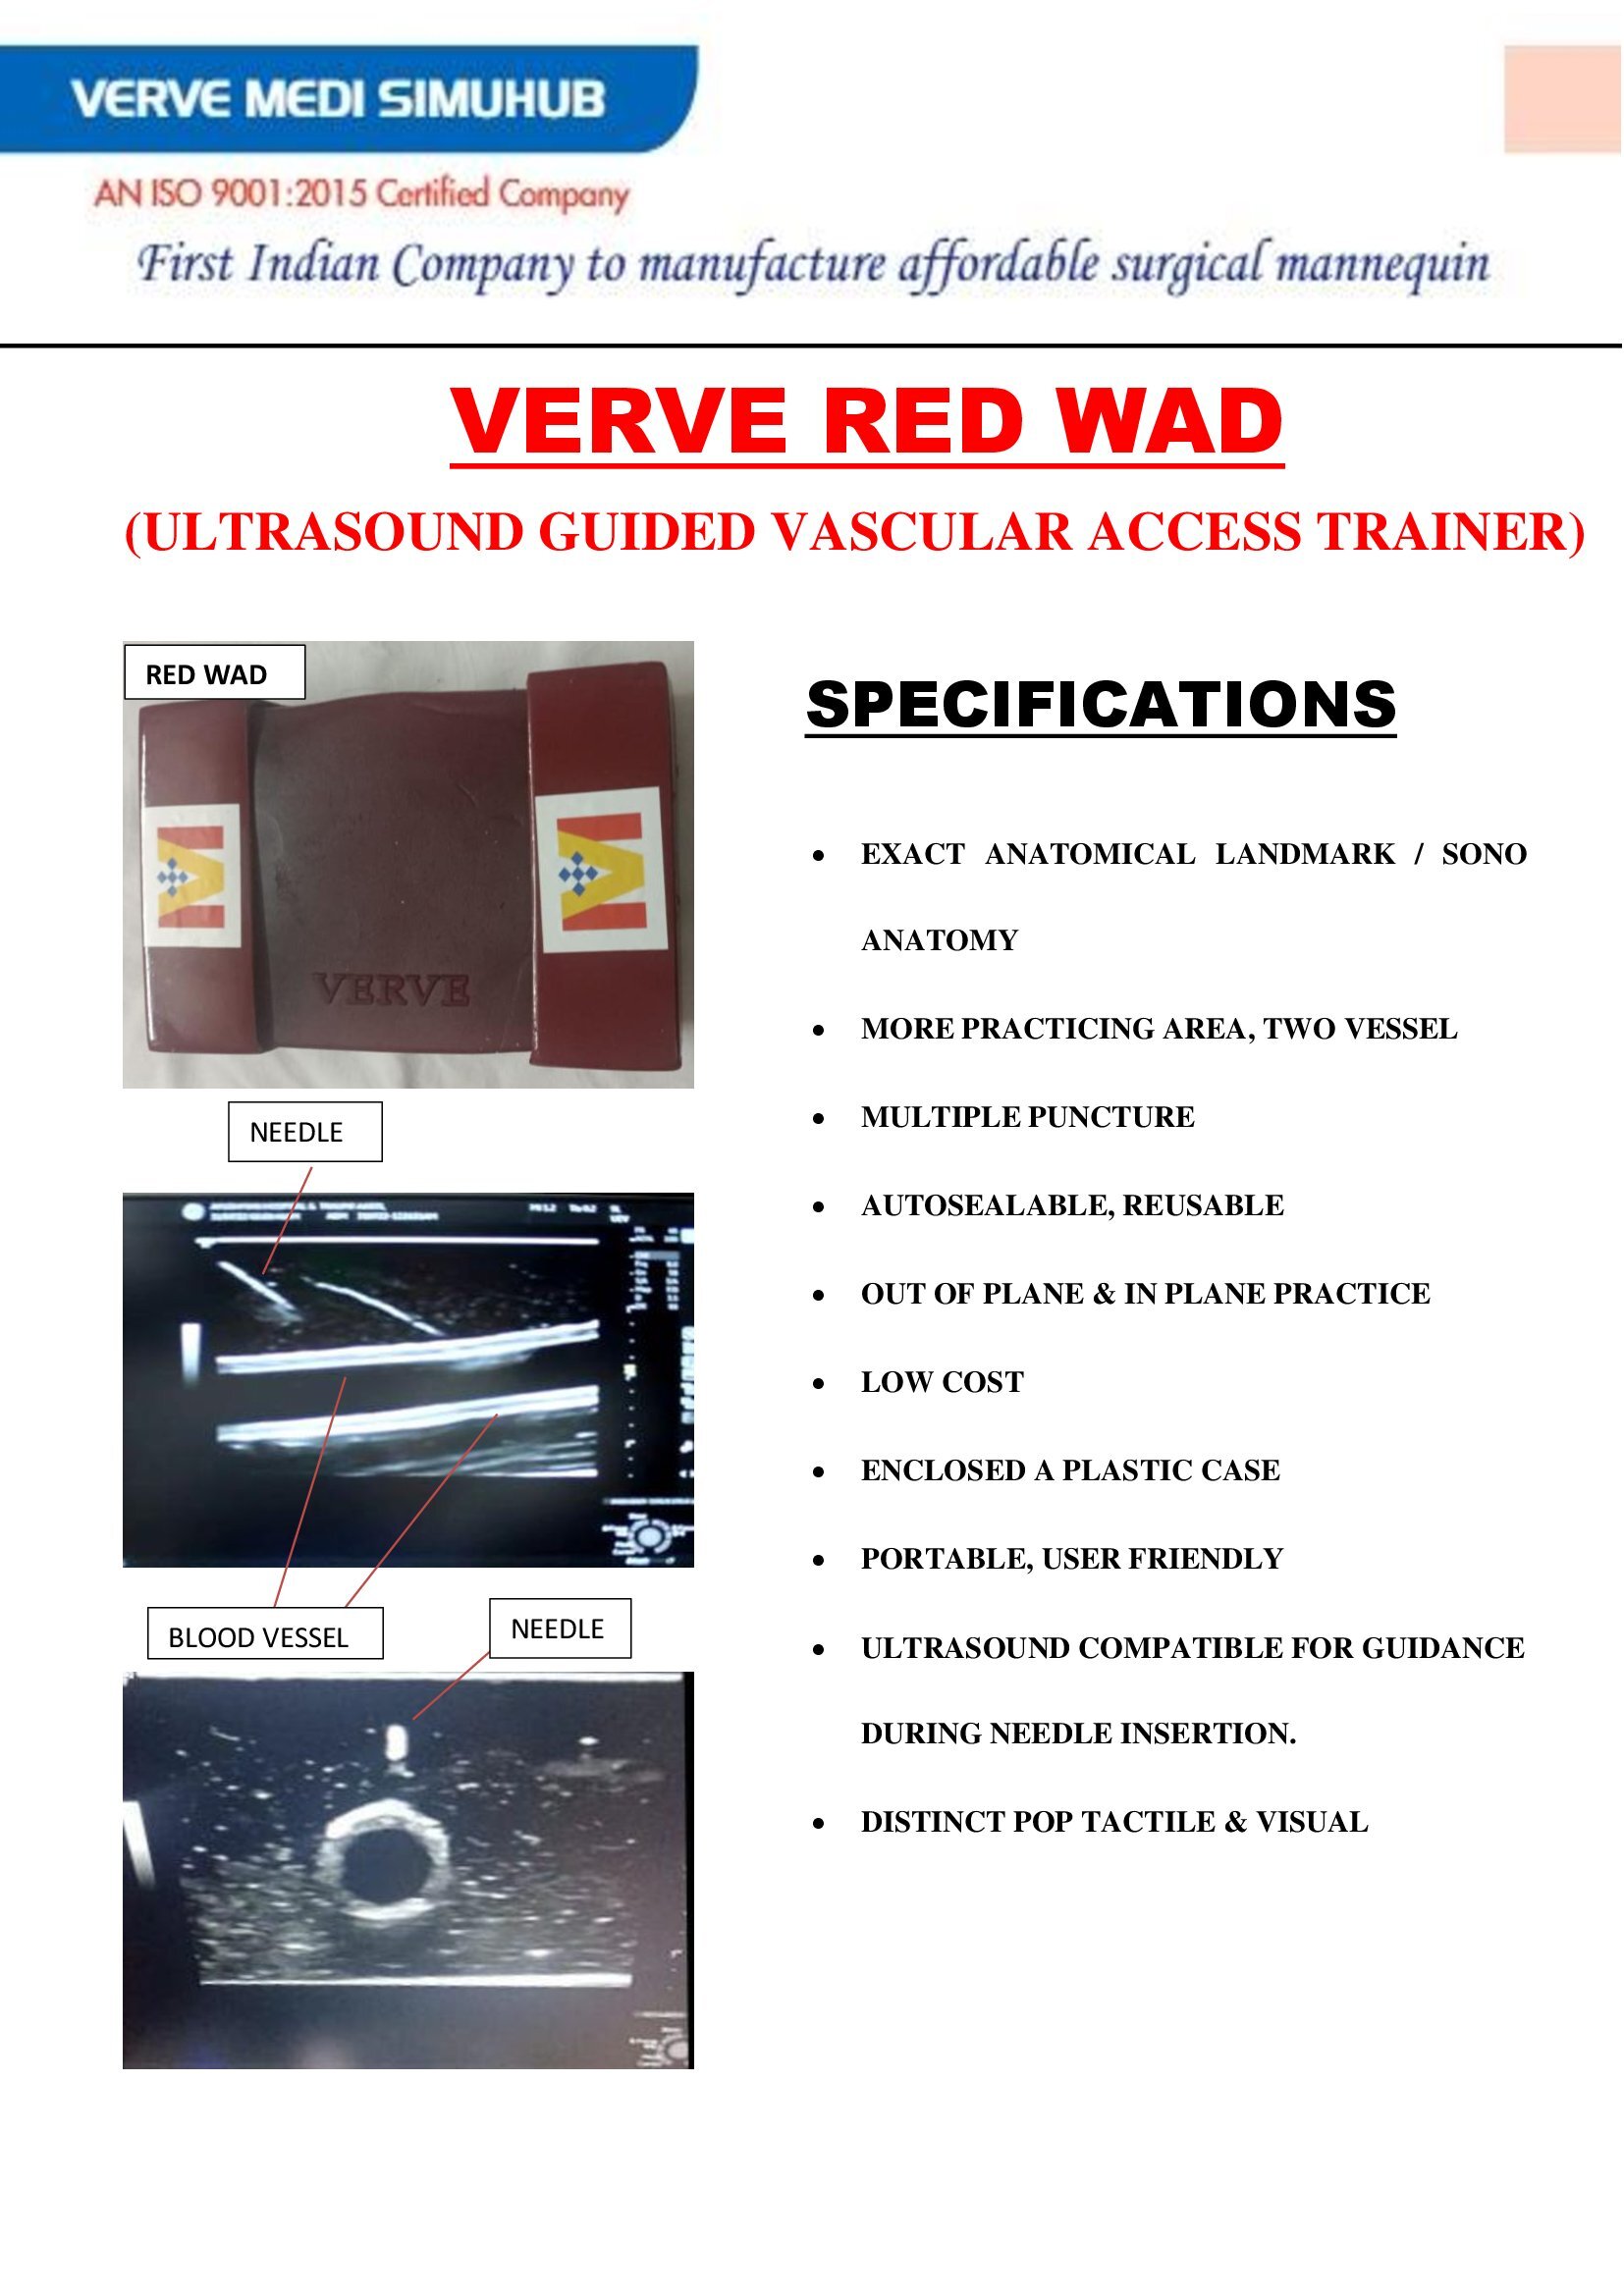 Verve - Red Wad